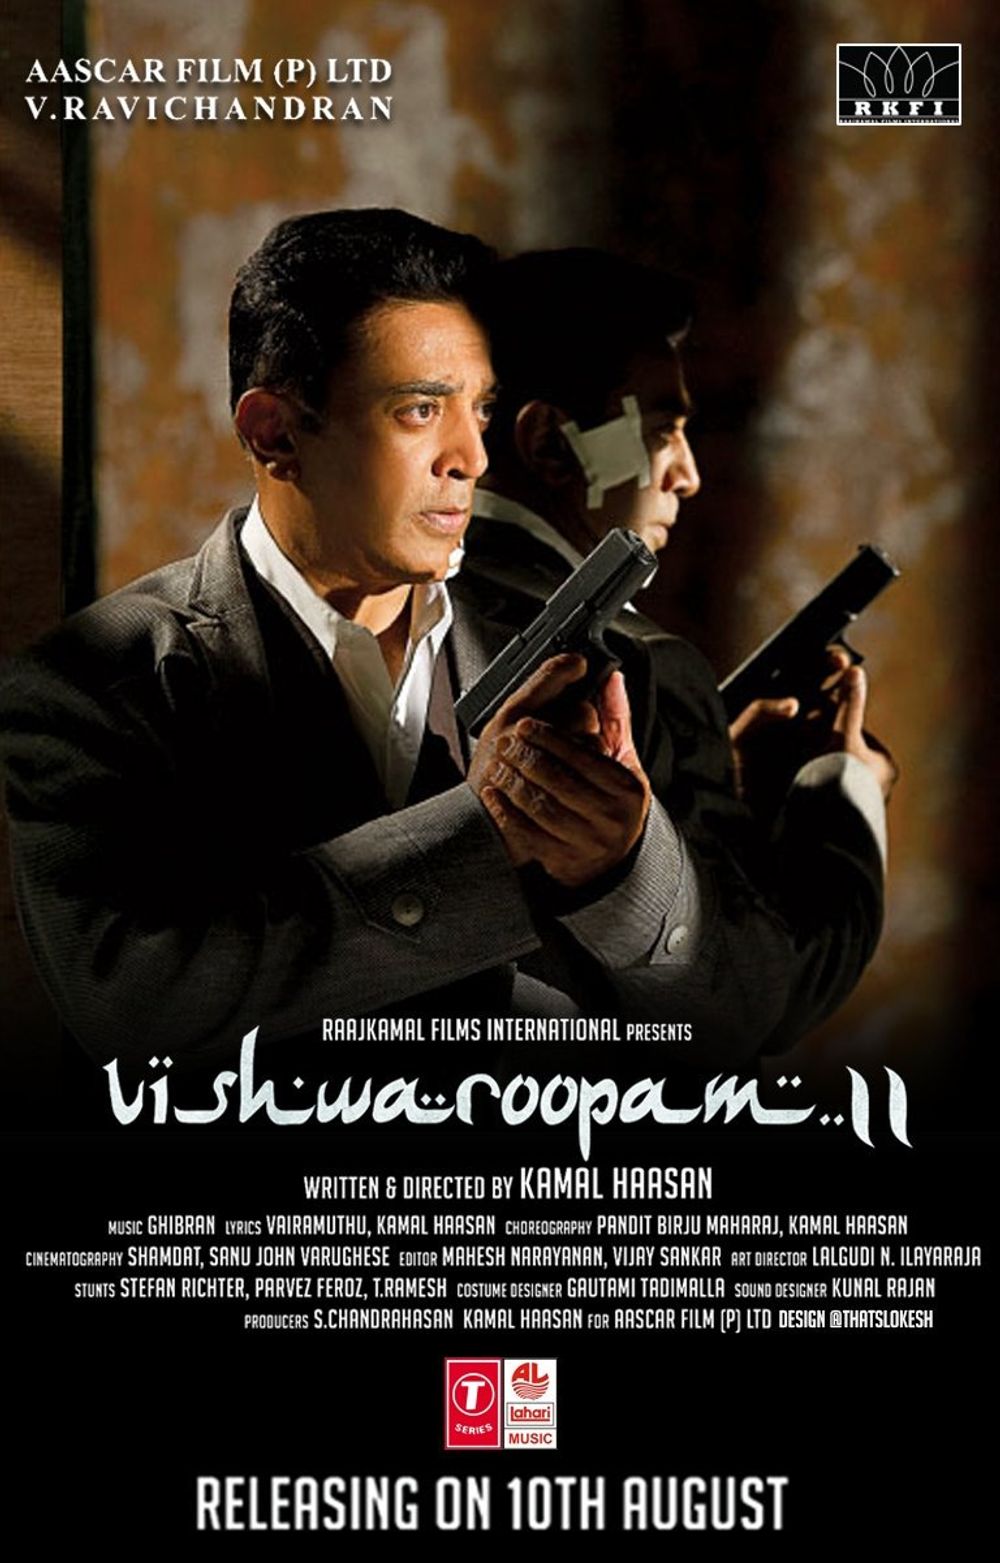 Vishwaroopam 2 poster featuring Kamal Haasan